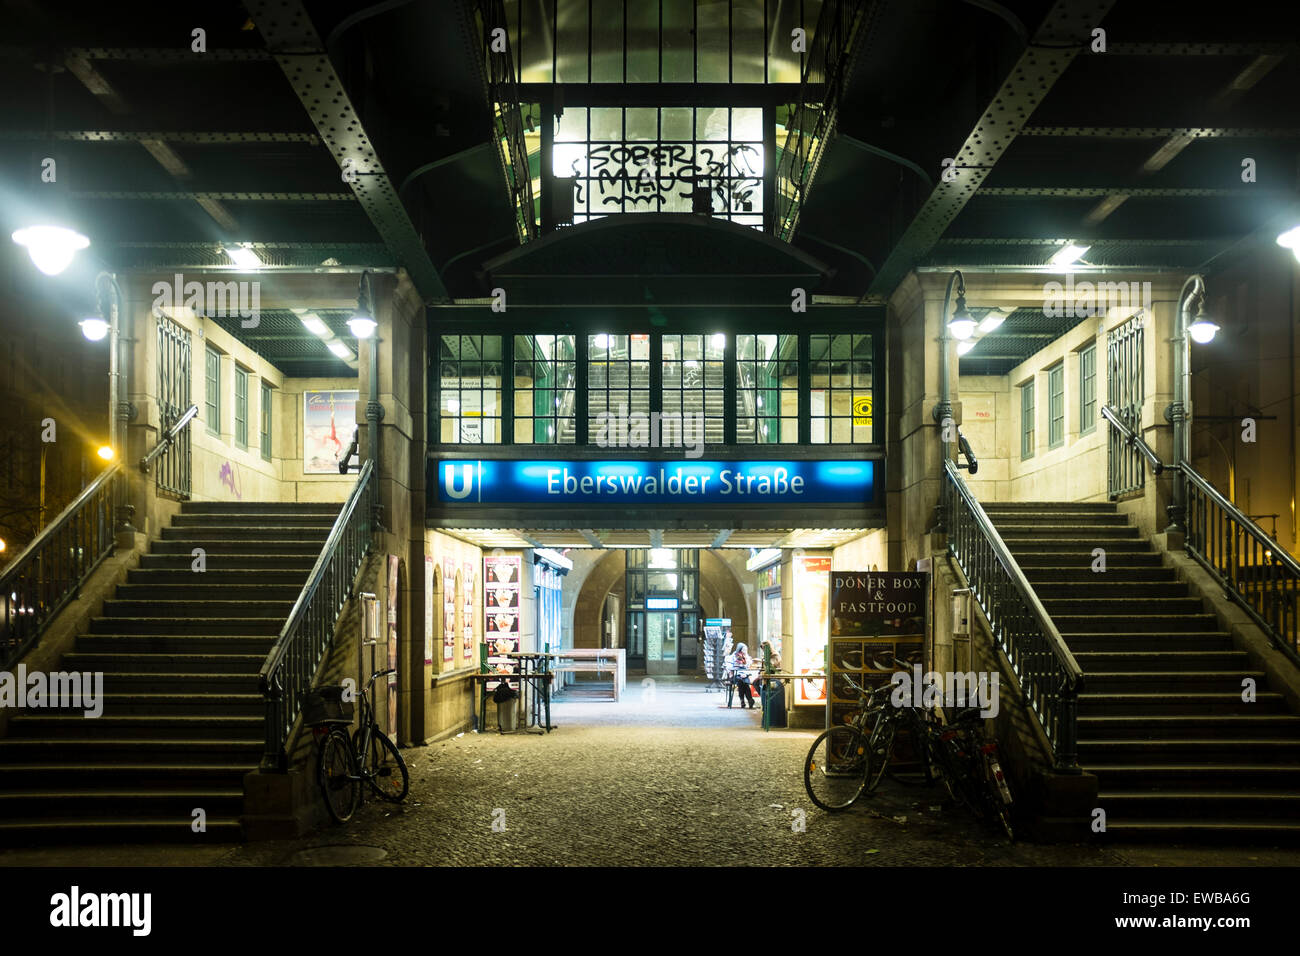 Stazione metropolitana metropolitana di Eberswalder Strasse, Berlino, Germania Foto Stock